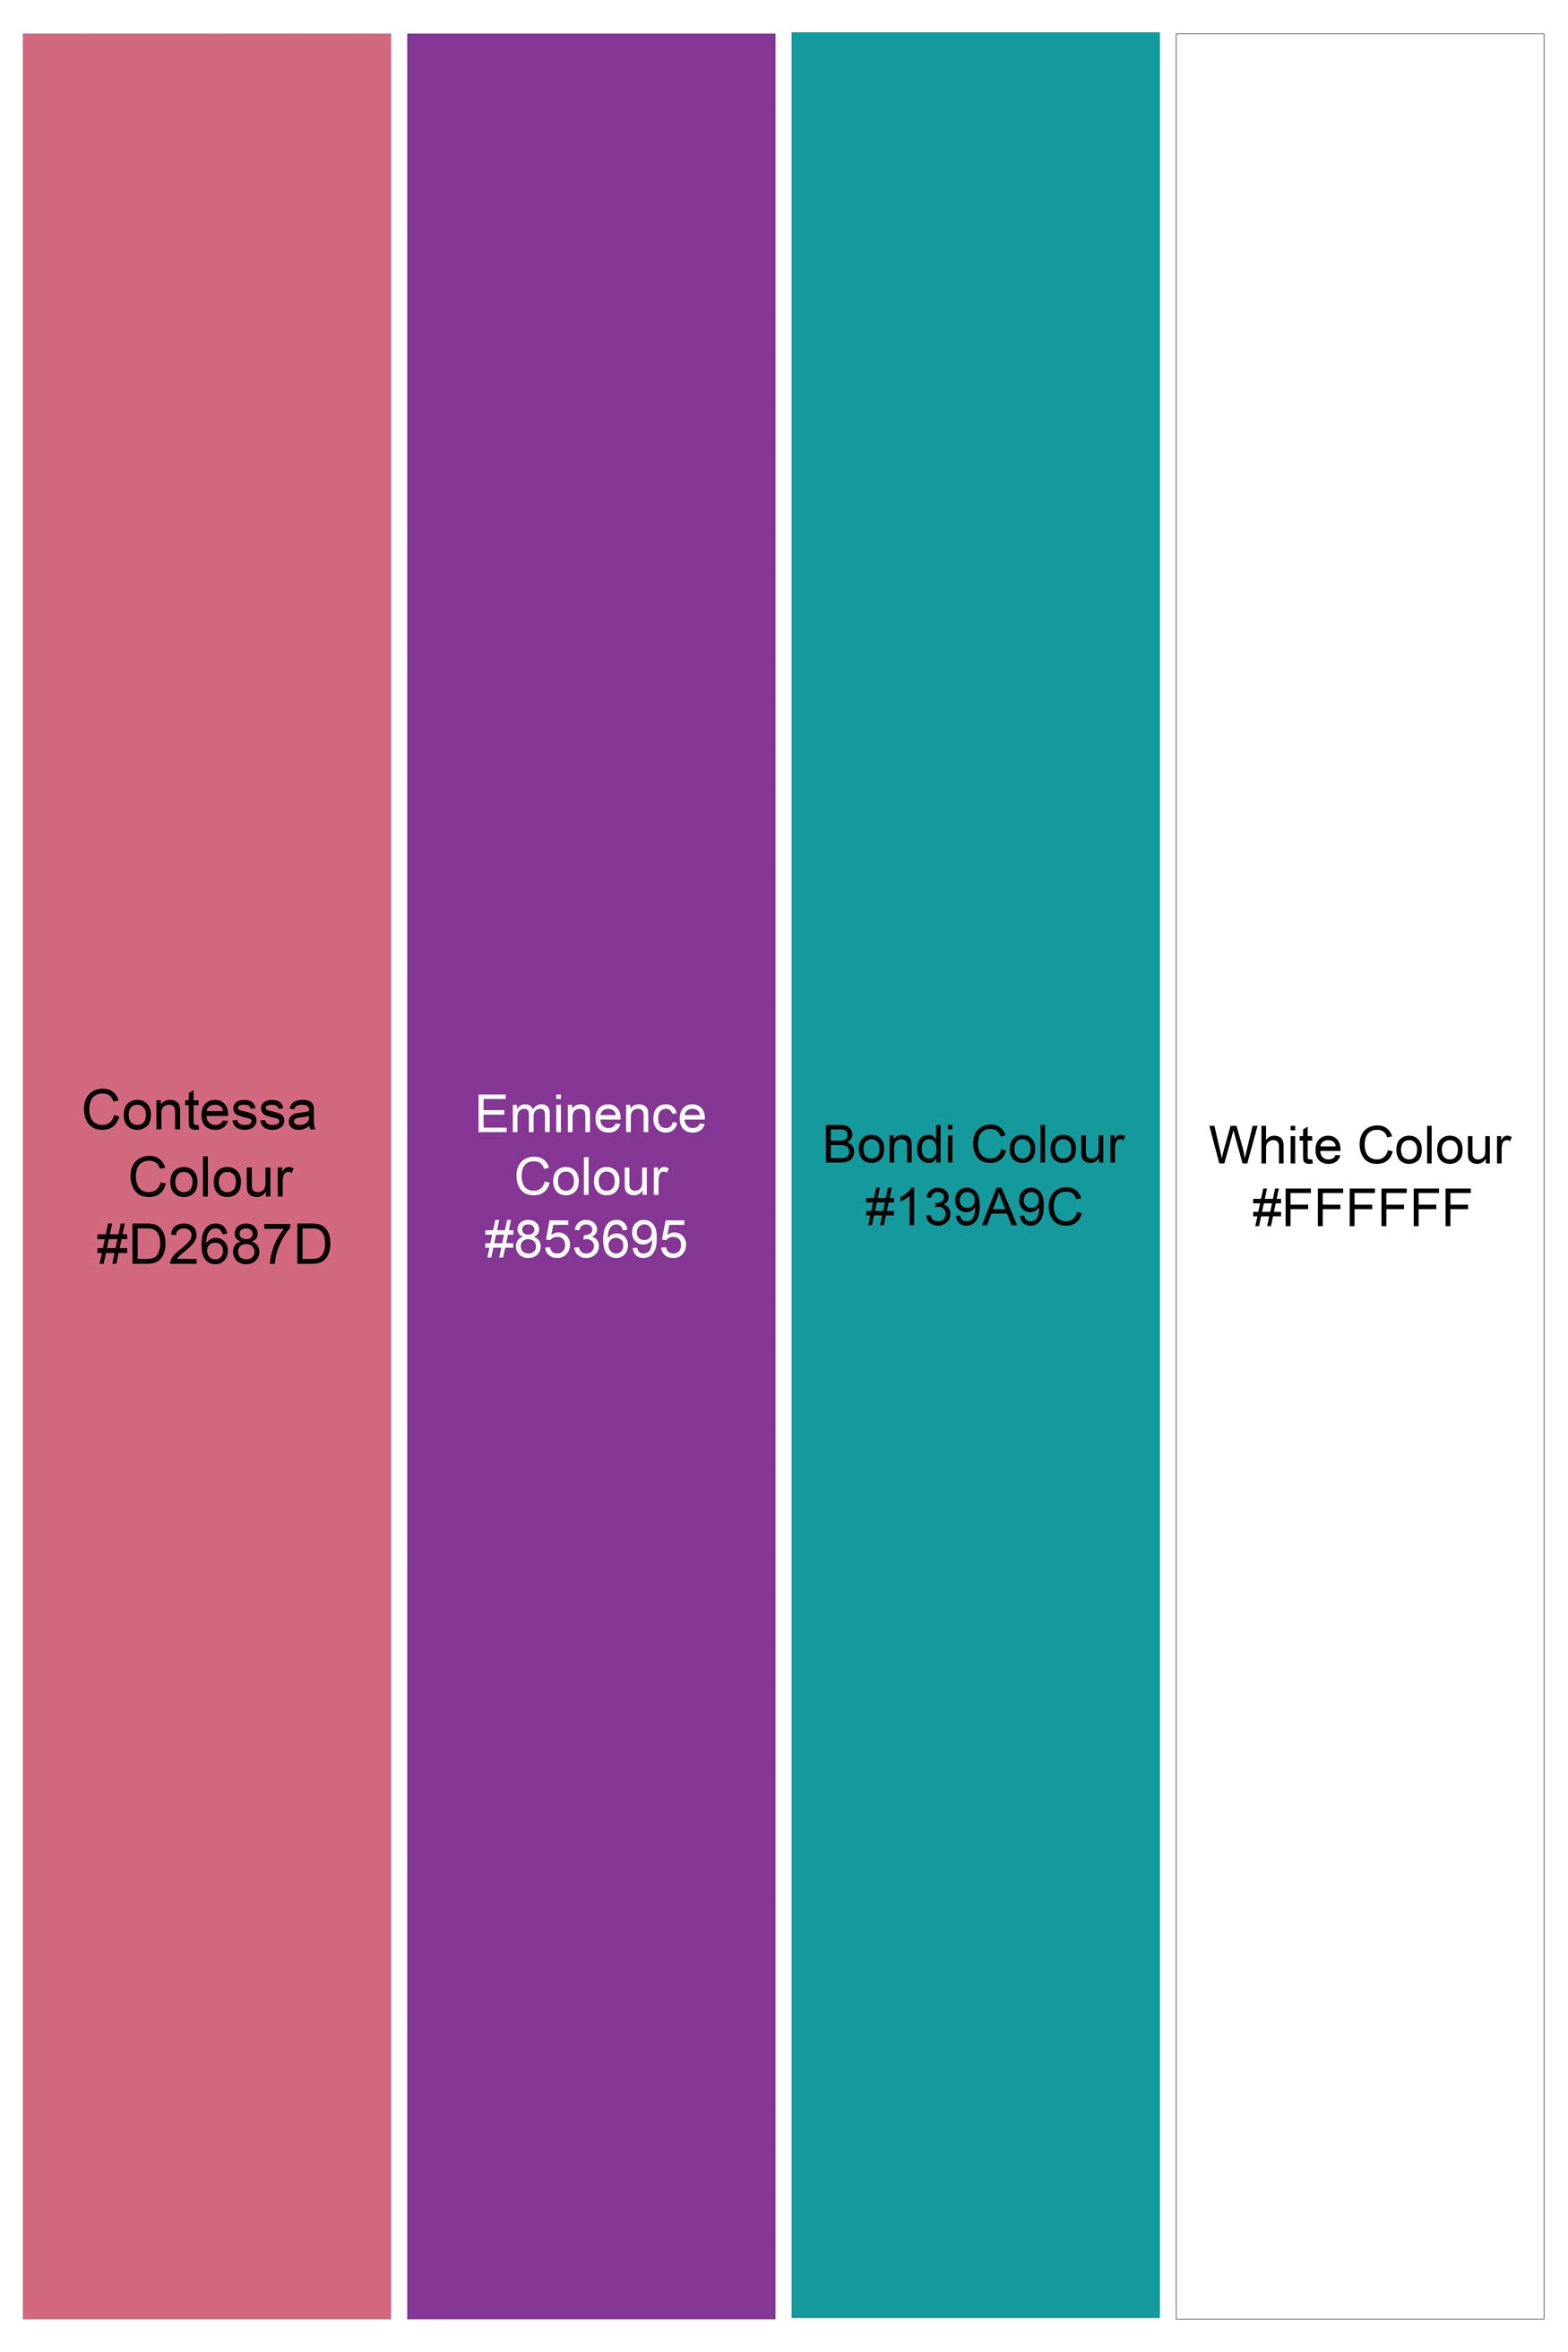 Contessa Pink with Eminence Purple and Bondi Green Twill Plaid Premium Cotton Shirt 11698-CA-MN-38, 11698-CA-MN-H-38, 11698-CA-MN-39, 11698-CA-MN-H-39, 11698-CA-MN-40, 11698-CA-MN-H-40, 11698-CA-MN-42, 11698-CA-MN-H-42, 11698-CA-MN-44, 11698-CA-MN-H-44, 11698-CA-MN-46, 11698-CA-MN-H-46, 11698-CA-MN-48, 11698-CA-MN-H-48, 11698-CA-MN-50, 11698-CA-MN-H-50, 11698-CA-MN-52, 11698-CA-MN-H-52